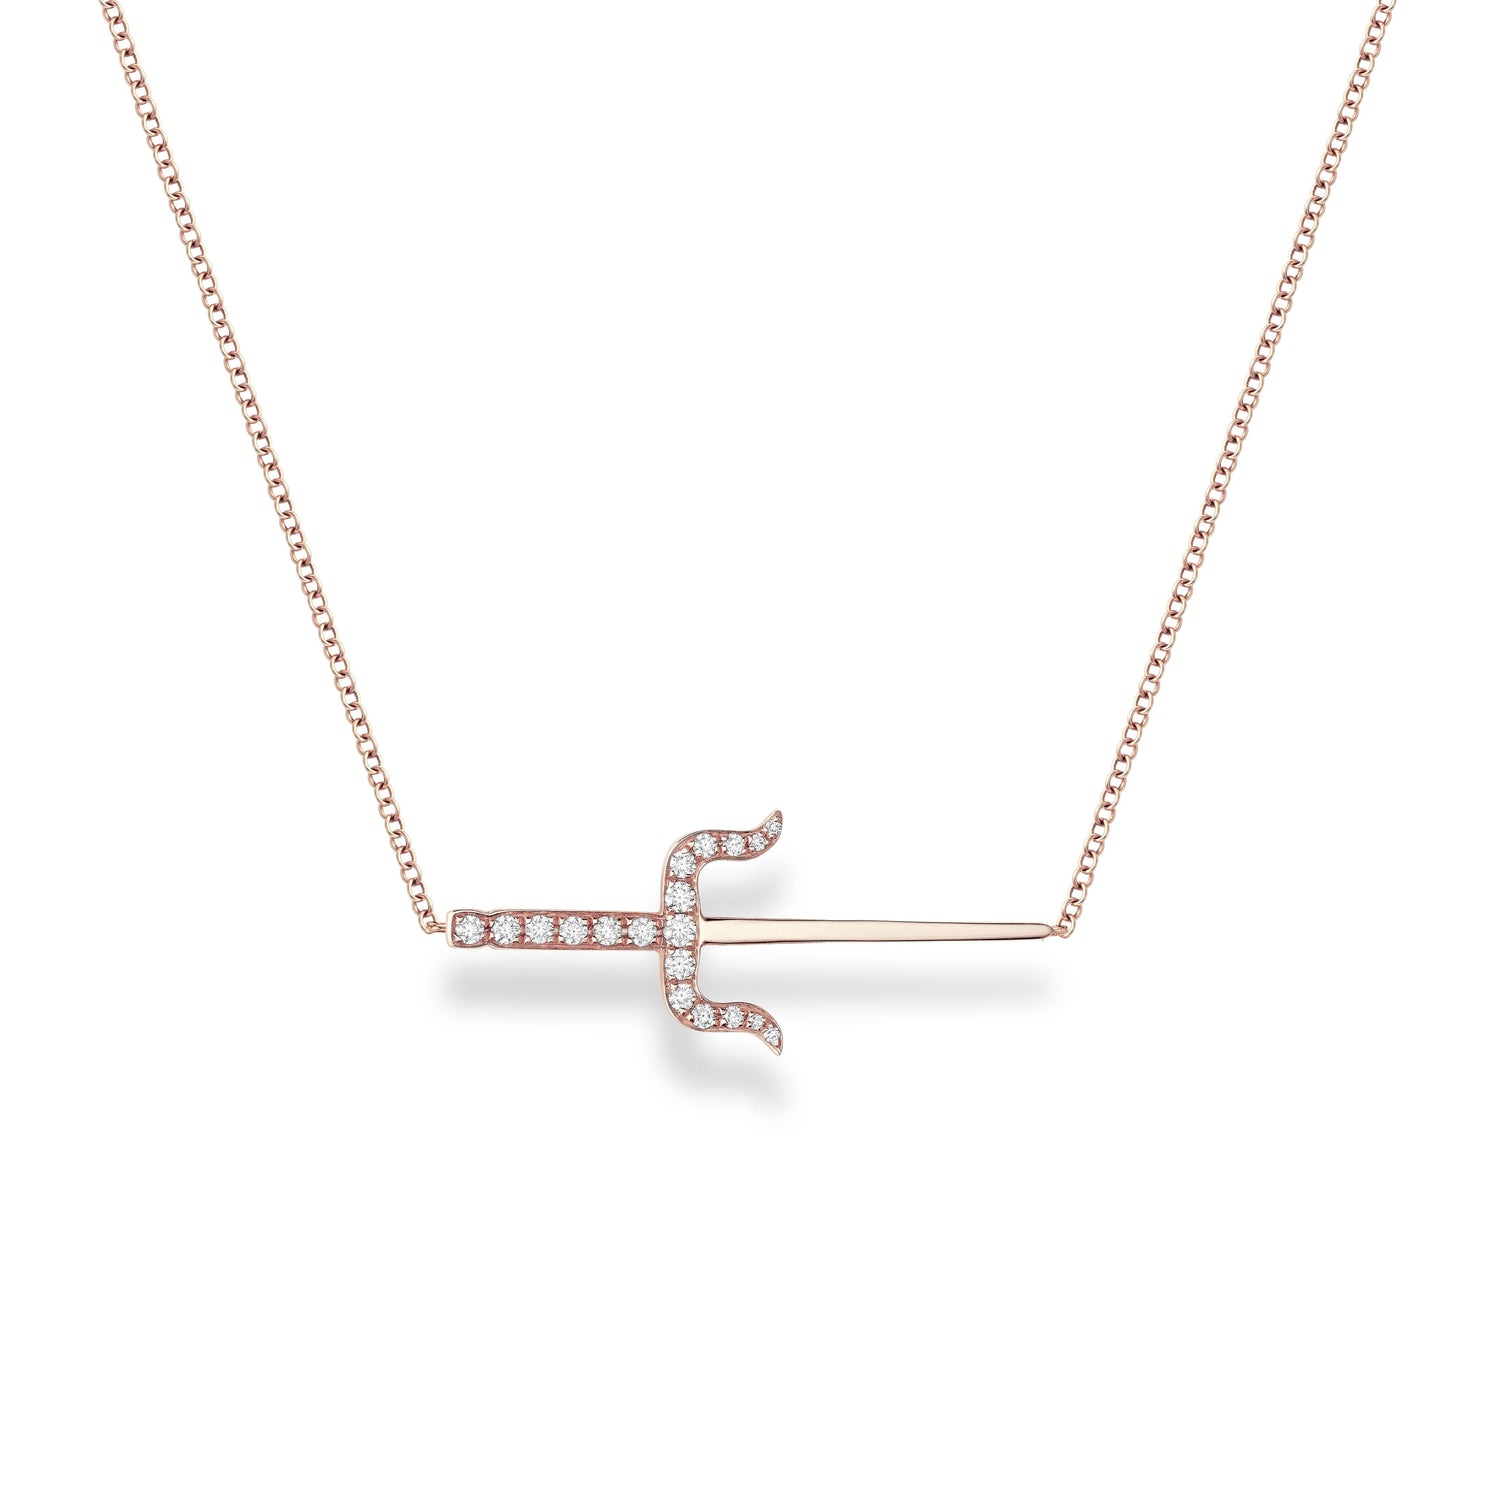 Sevdalie dagger pendent necklace, pave diamond solid 14k rose gold